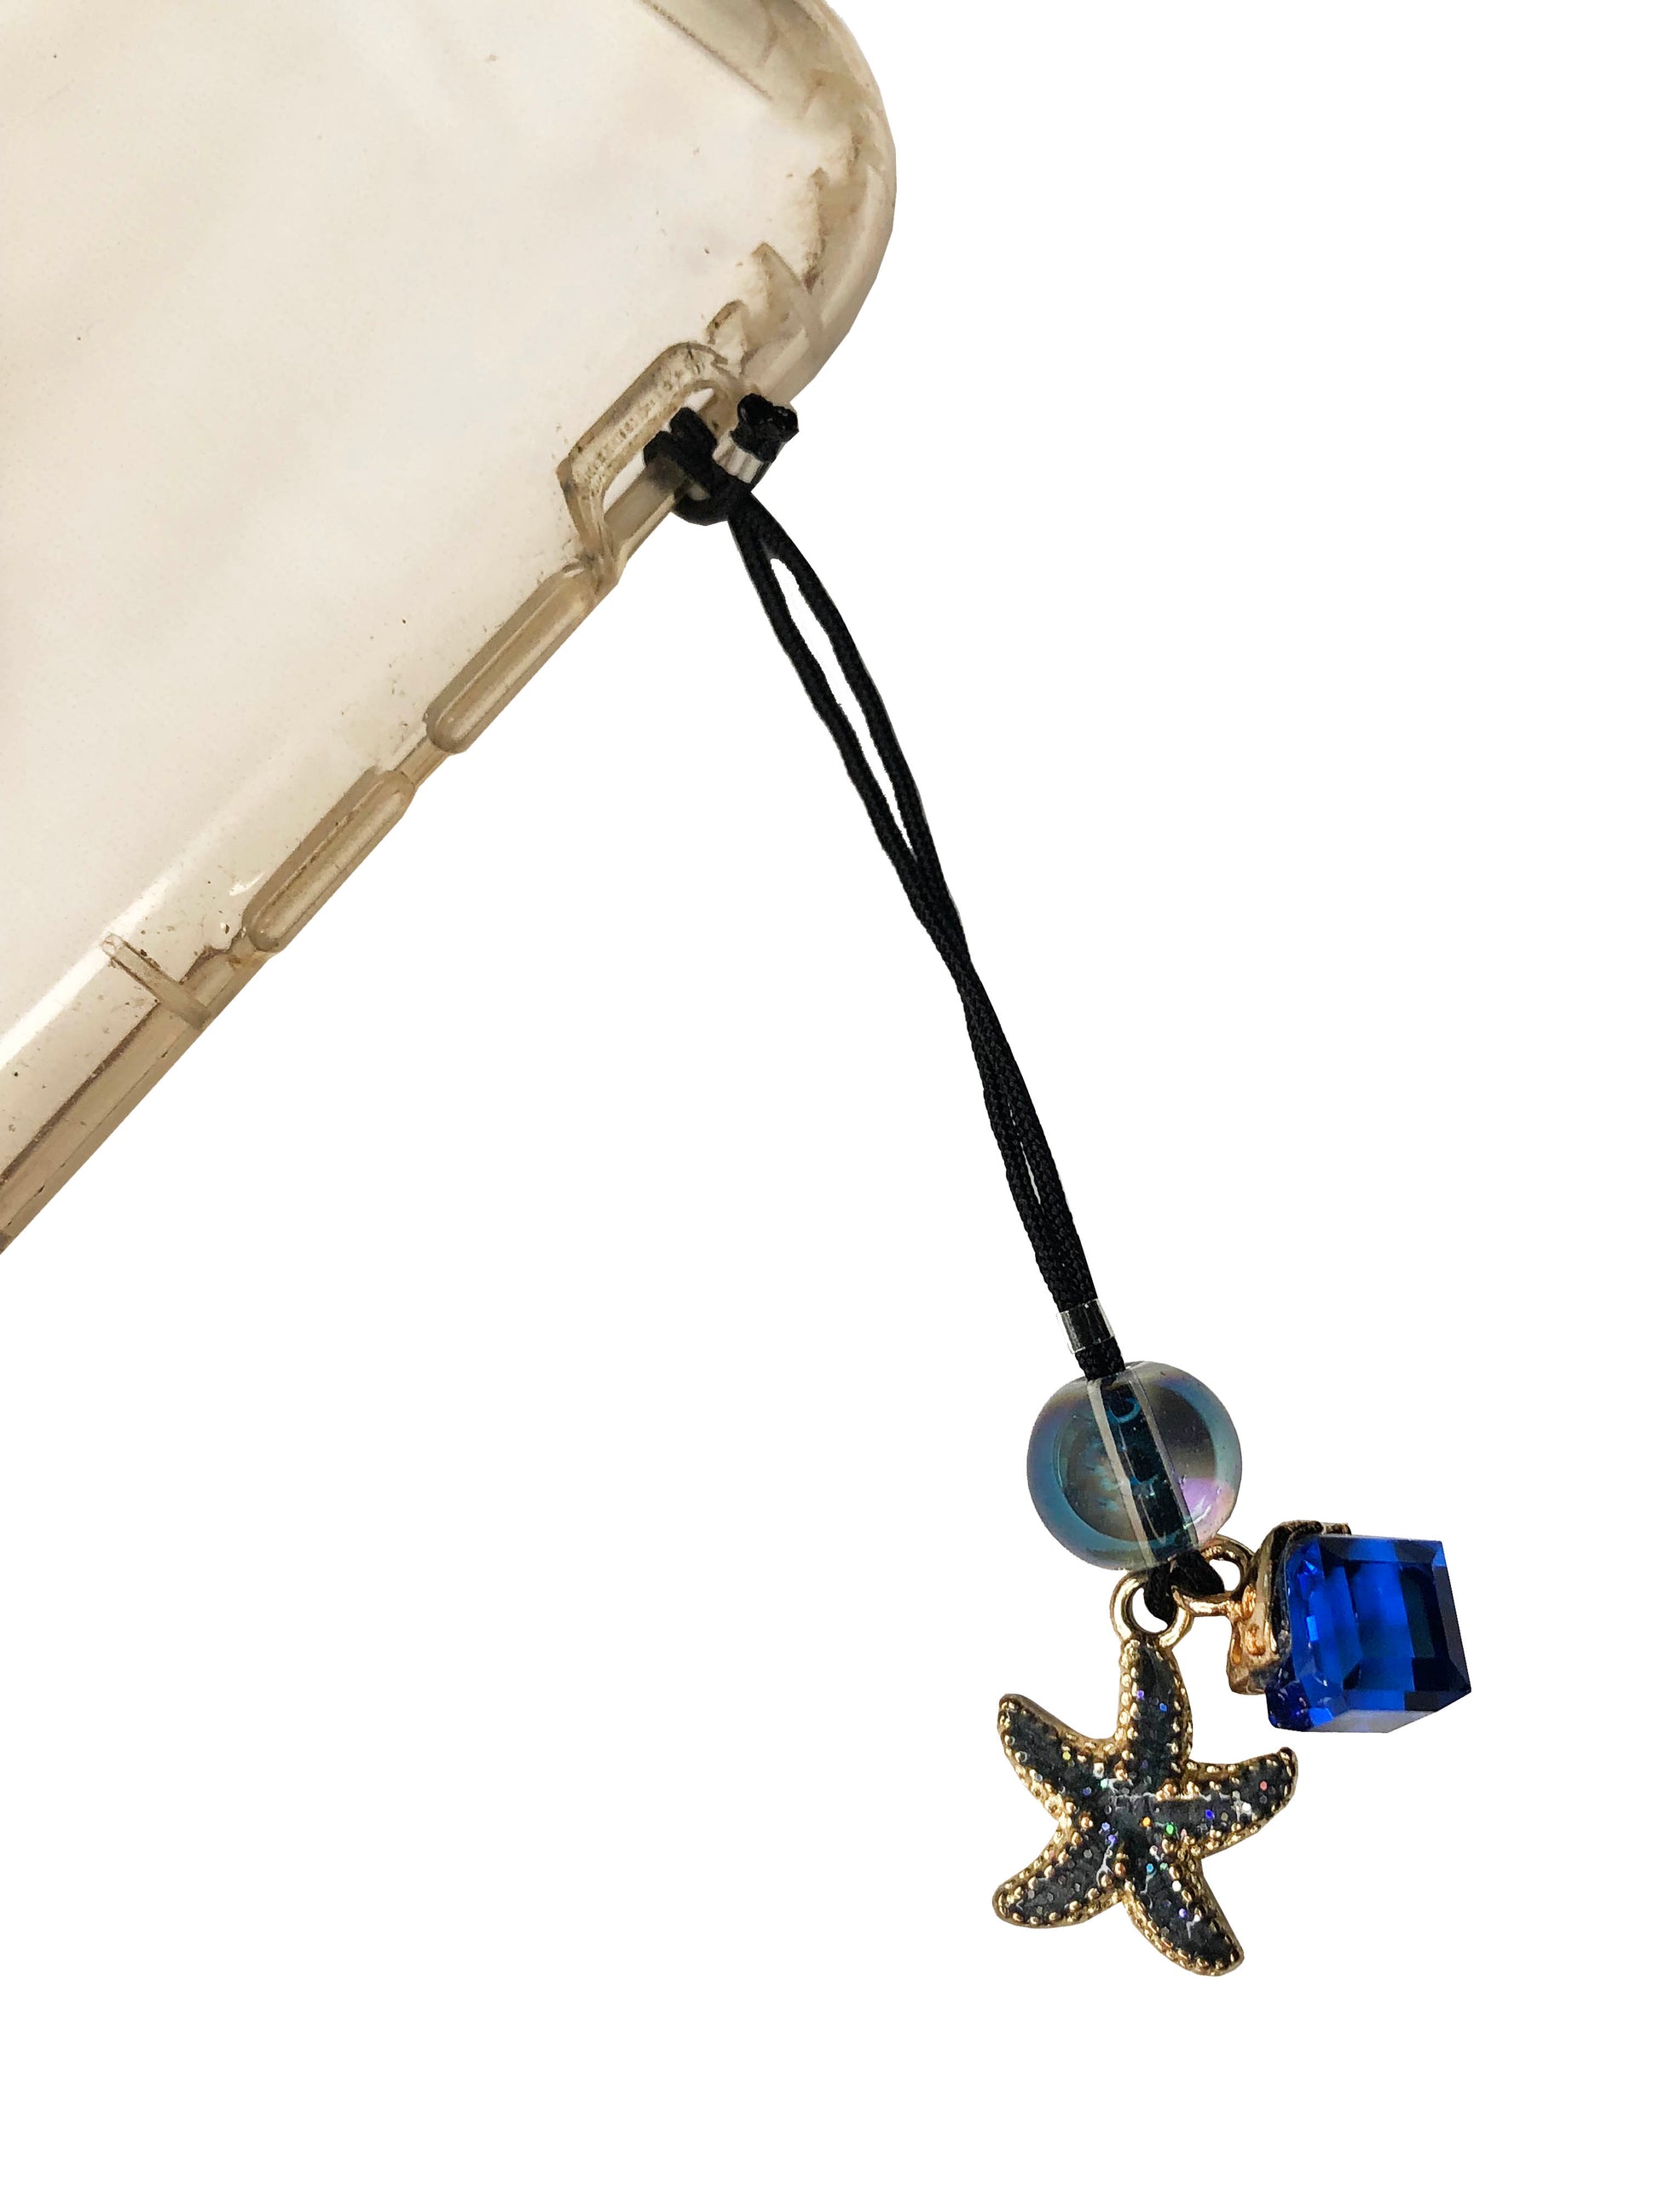 Handmade beaded phone charm made using starfish charm, a glass bead, and a blue glass cube charm.